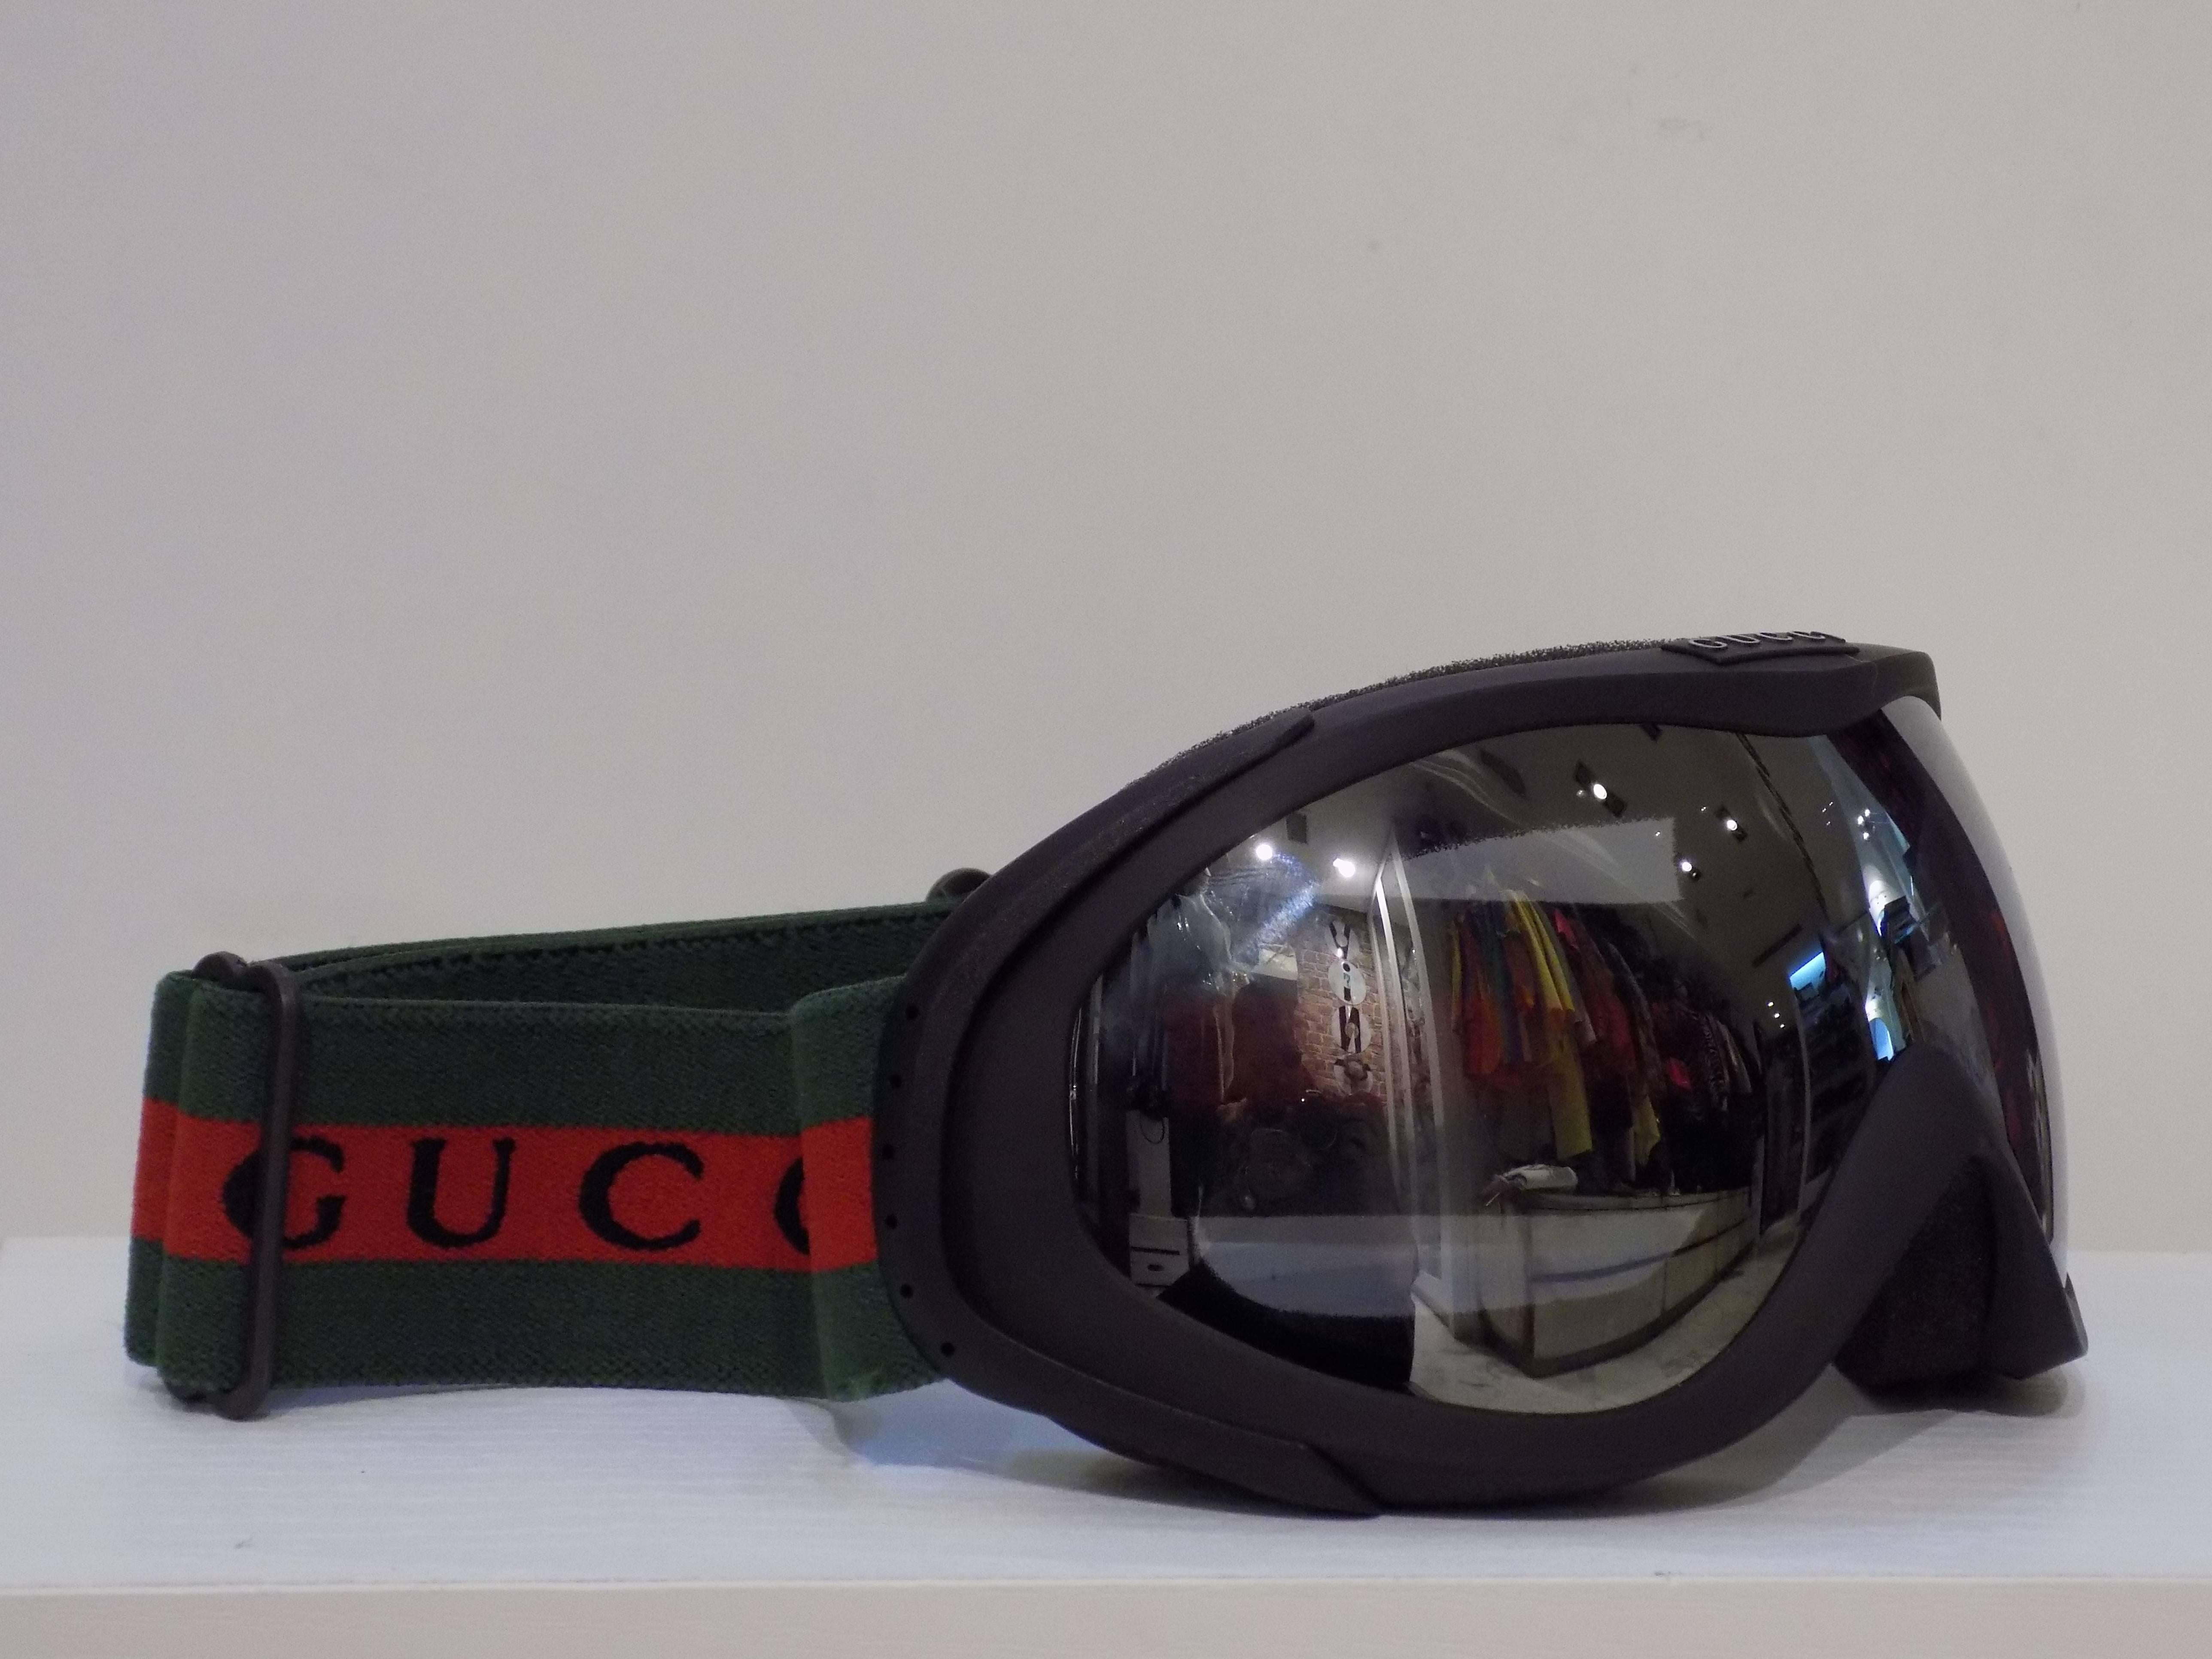 Gucci ski goggles 
black polyurethane with green/red/green elastic web
light silver anti-fog dual mirrored lens
100% UVA/UVB protection